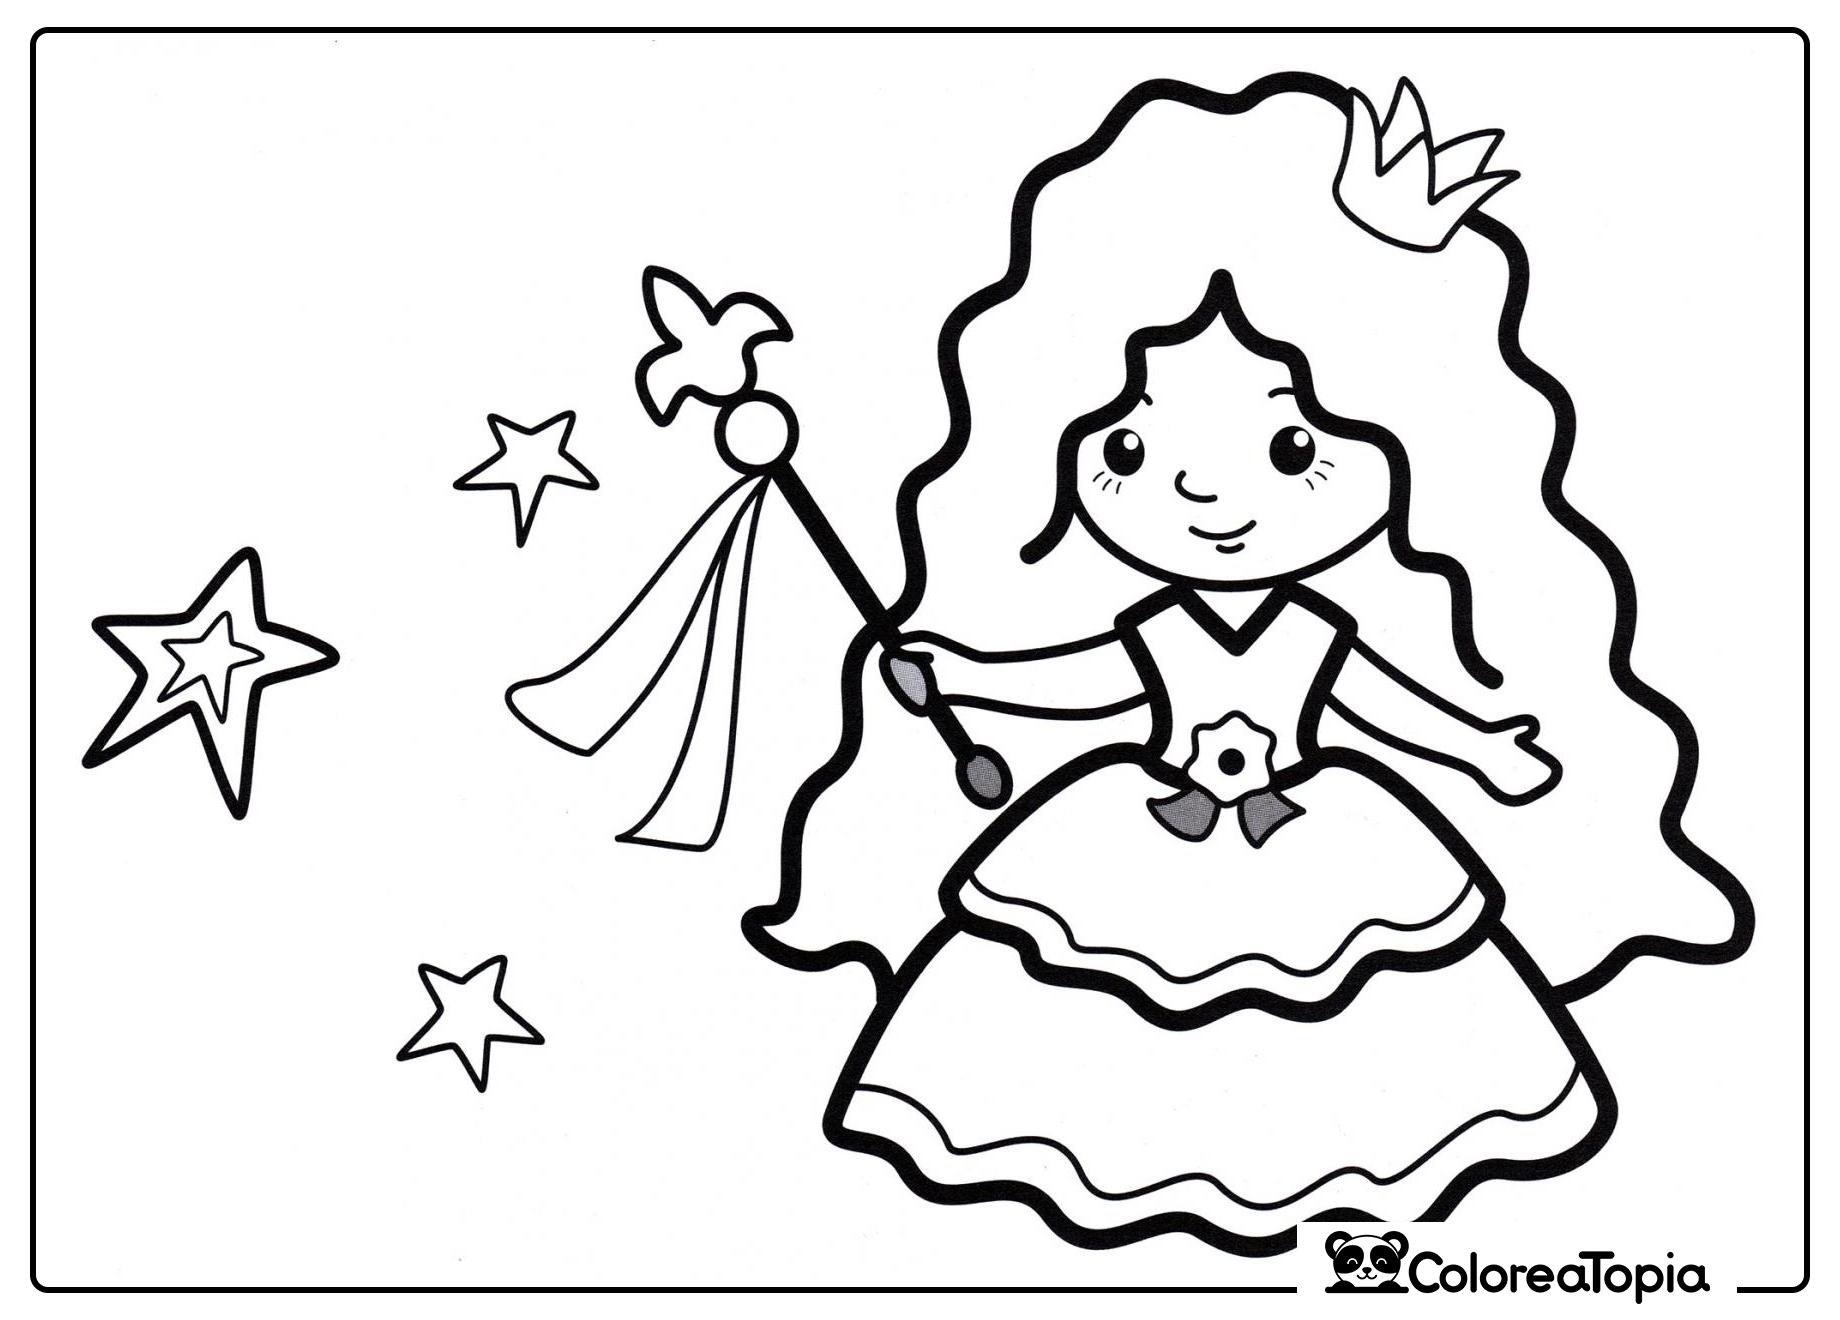 Princesa bruja - dibujo para colorear